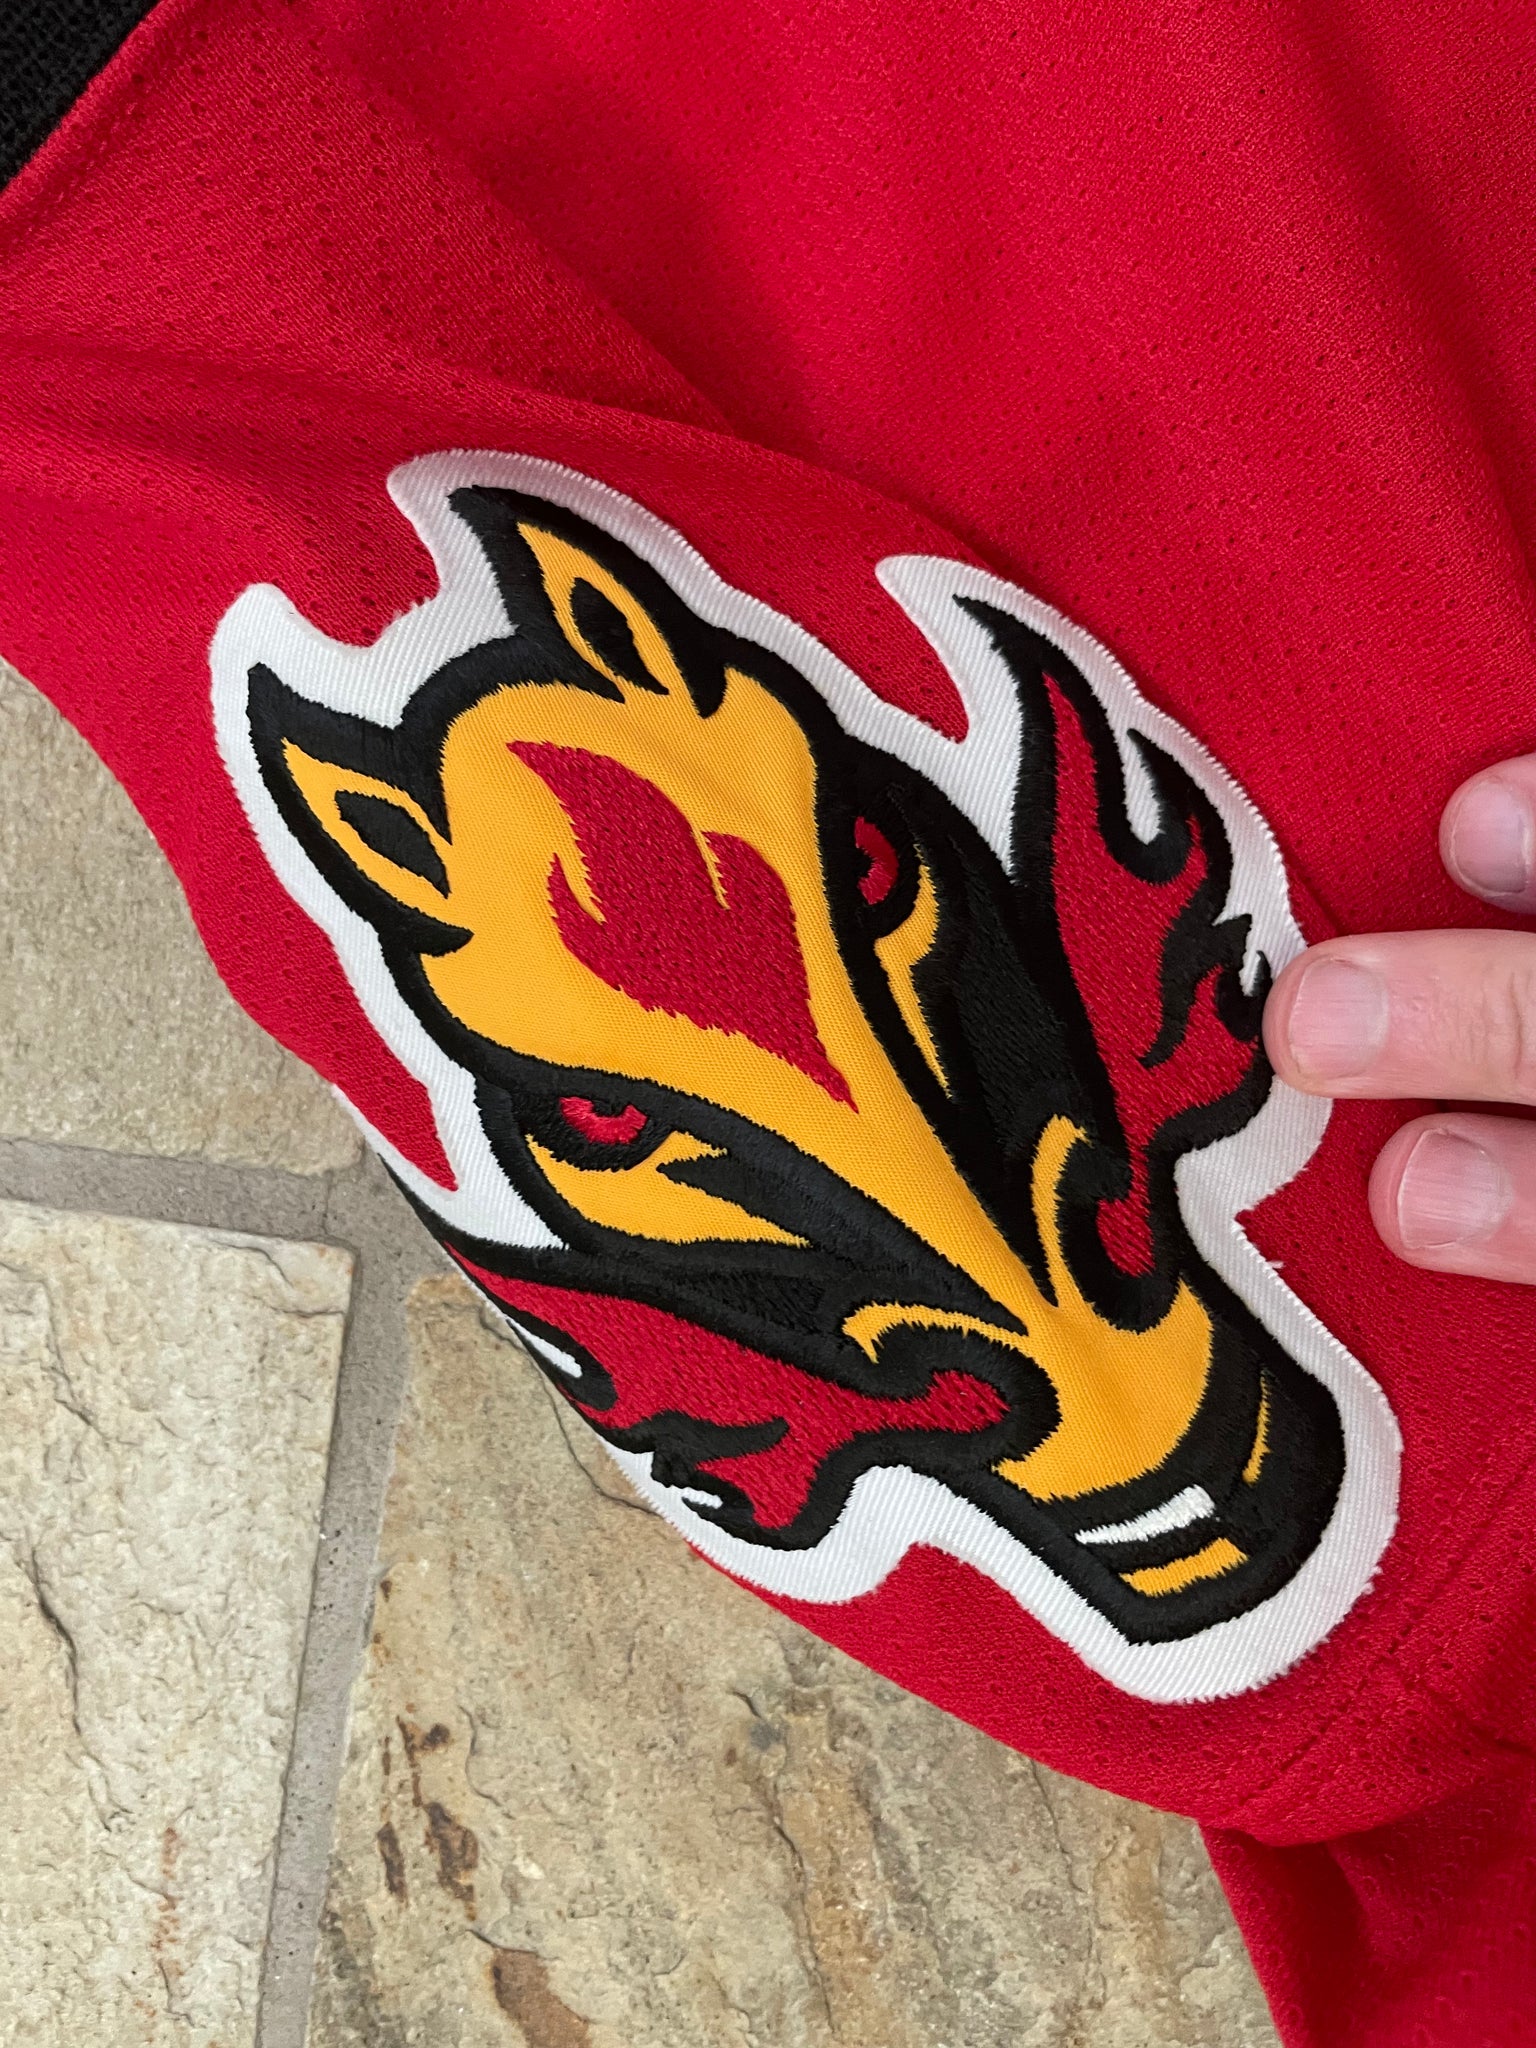 Calgary Flames THROWBACK Jarome Iginla HOCKEY Jersey 